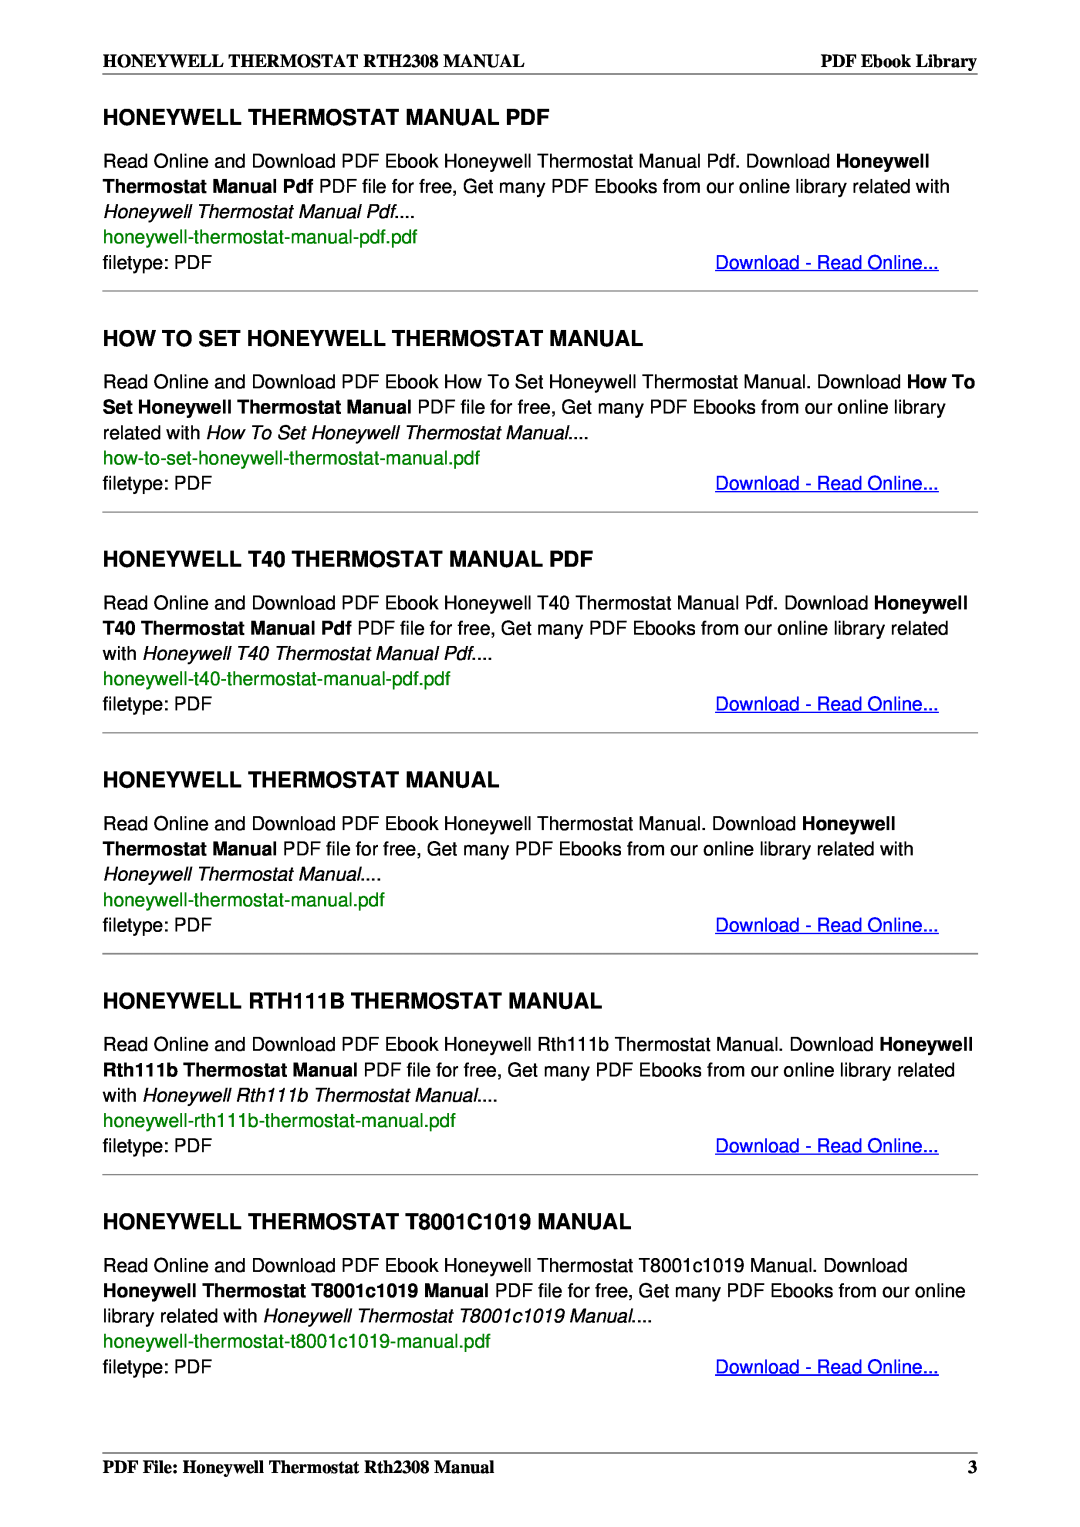 Honeywell RTH2308 Honeywell Thermostat Manual Pdf, How To Set Honeywell Thermostat Manual, honeywell-thermostat-manual.pdf 